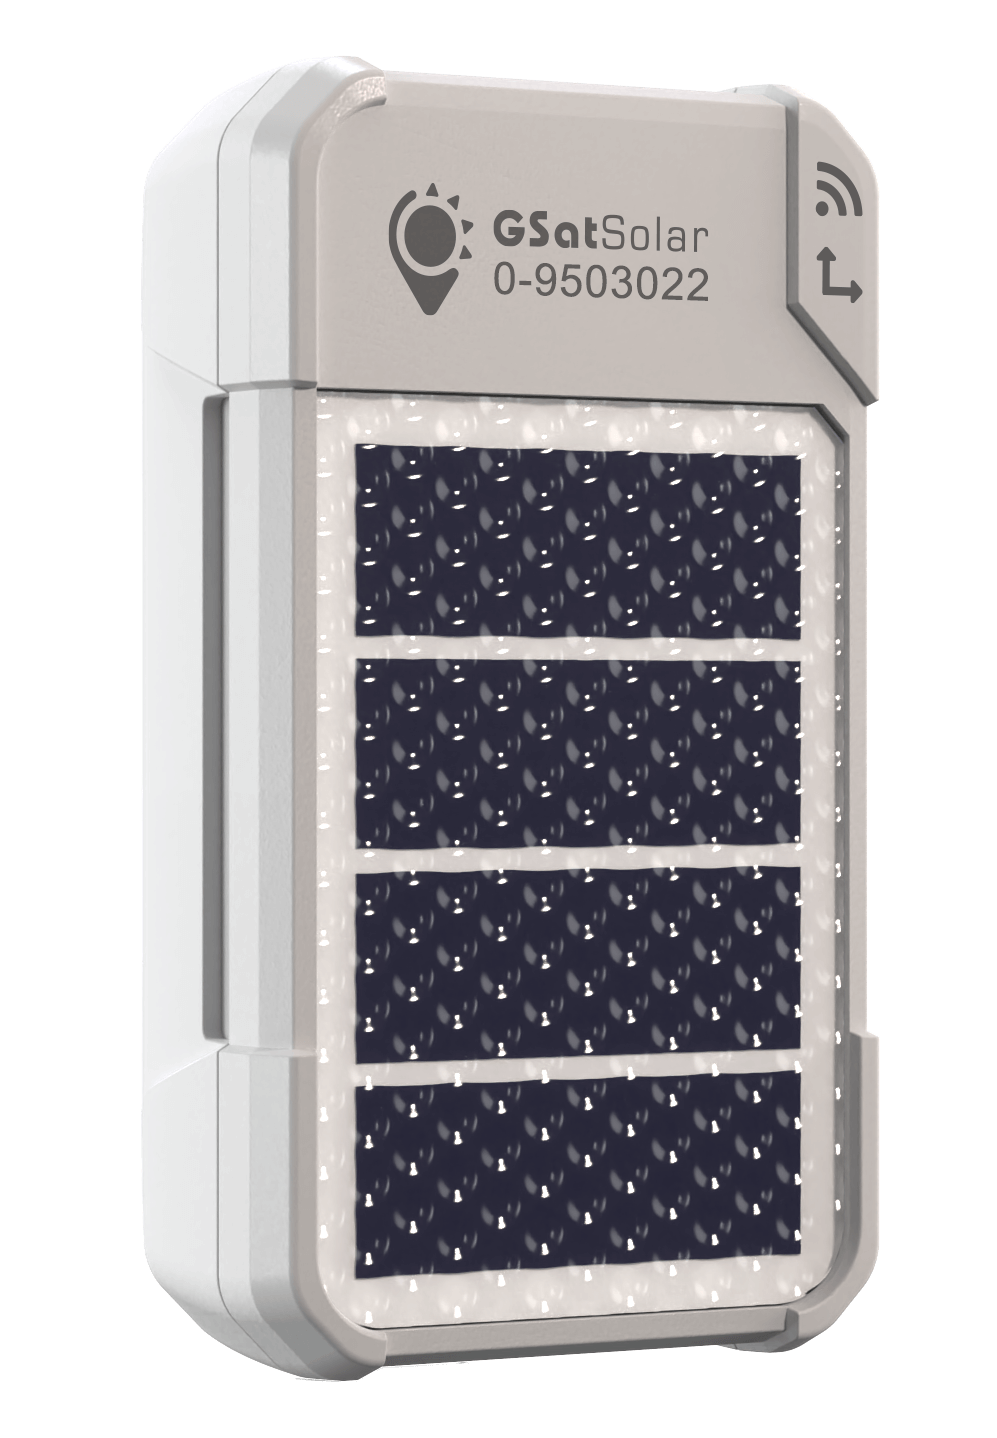 GSatSolar: Solar Powered Satellite Tracking Device